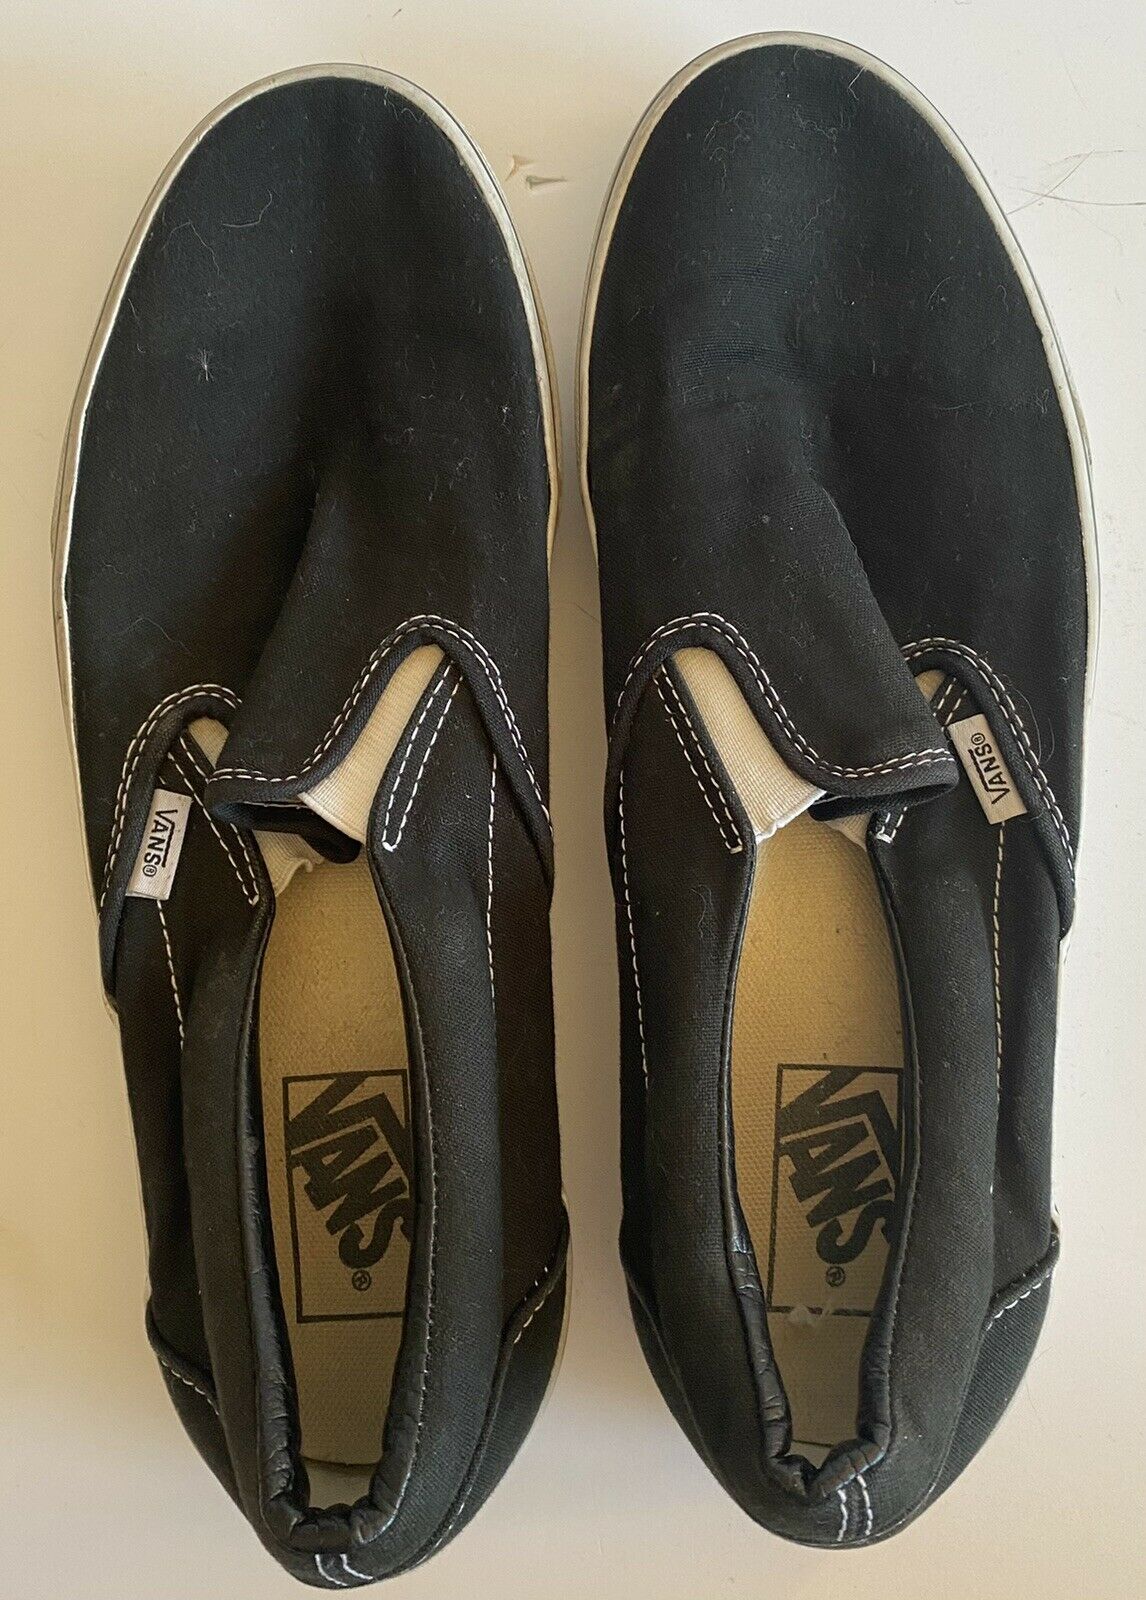 VANS Solid Black Slip On Men’s Shoes Size 10.5 Women’s Size 12 Classic Style